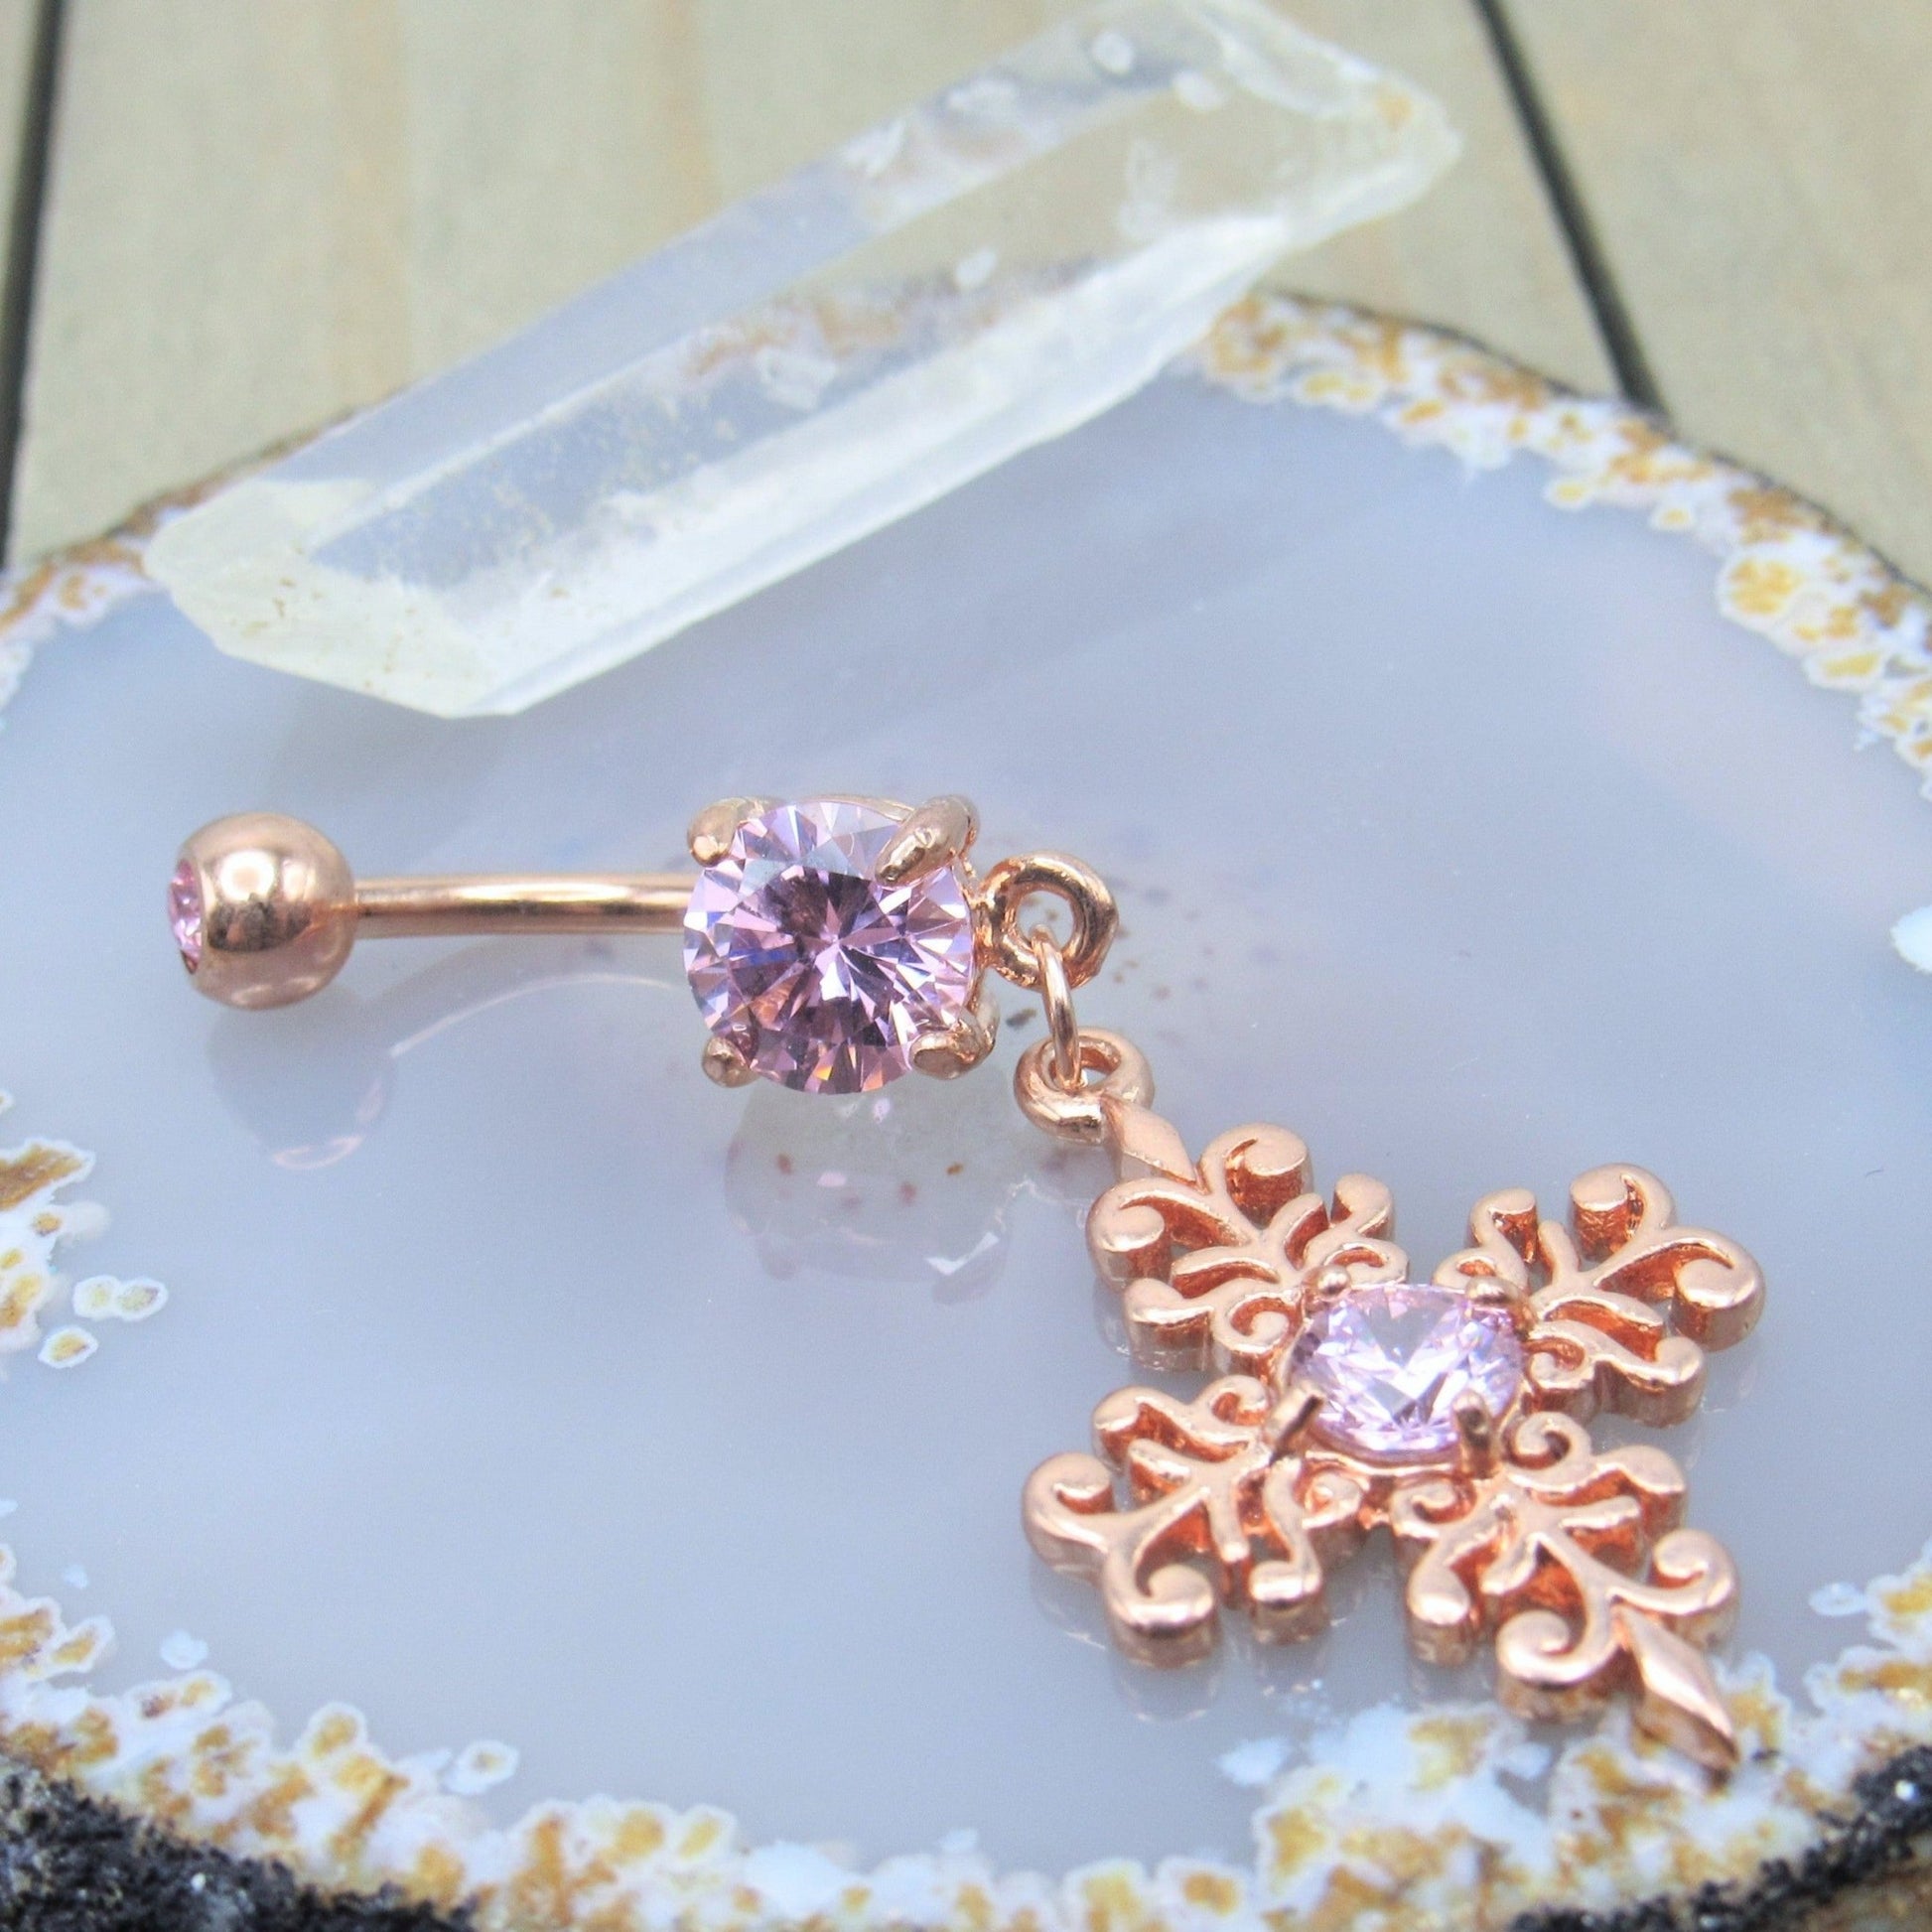 Rose gold cross dangle belly button piercing jewelry 14g 7/16" elegant pink cz gemstones navel ring - Siren Body Jewelry